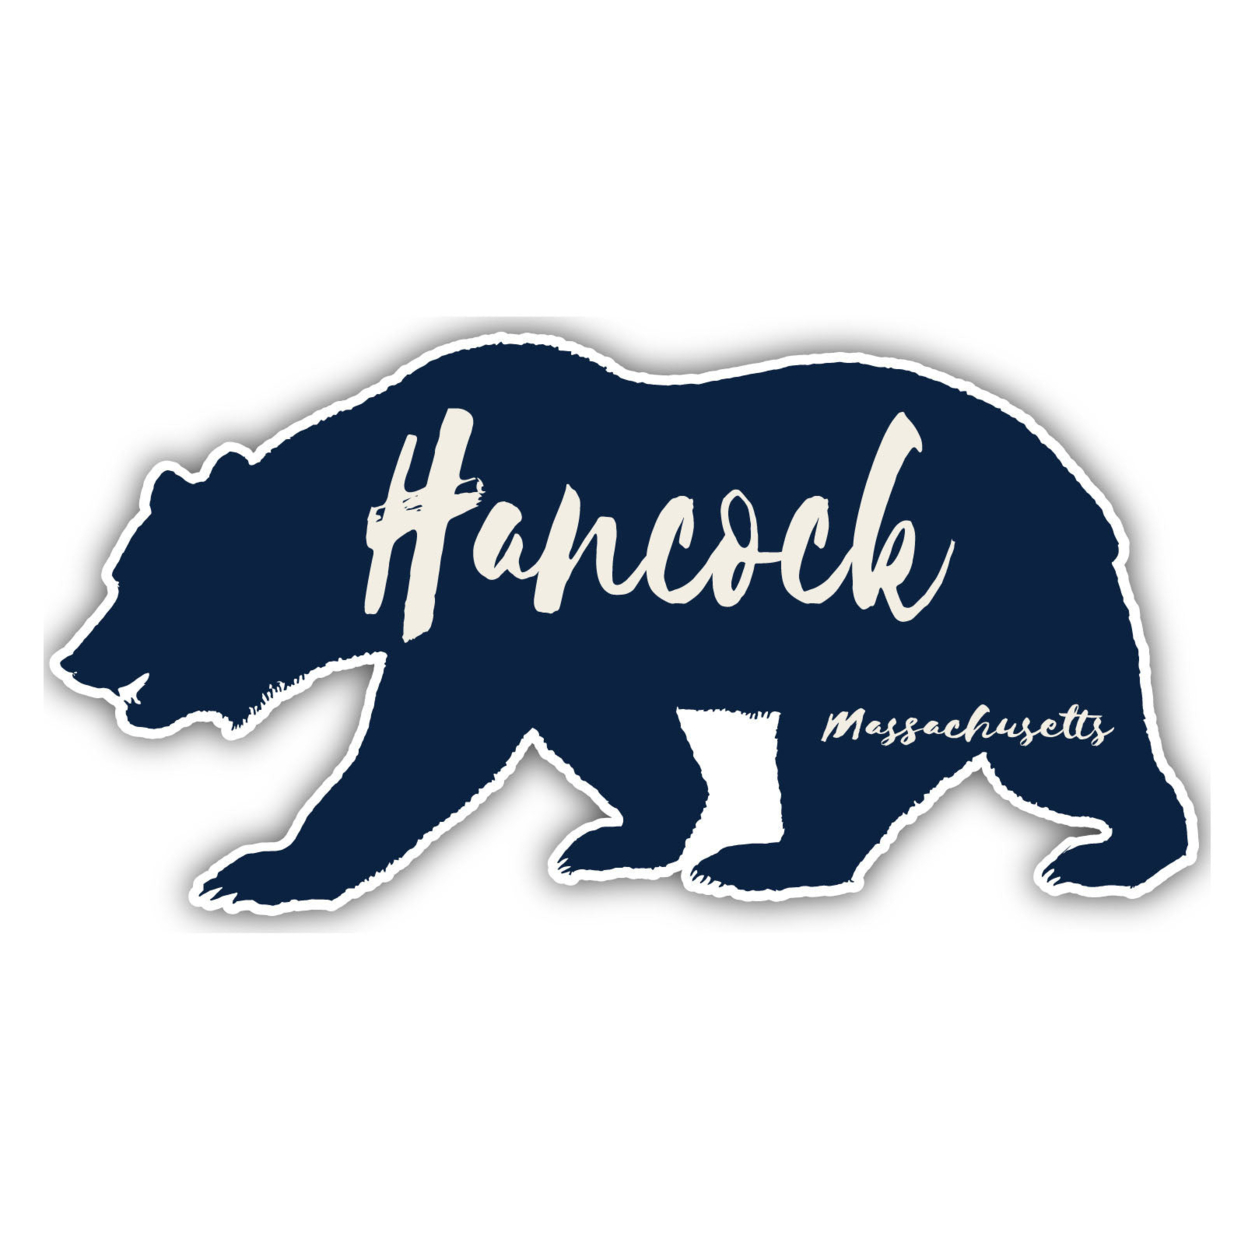 Hancock Massachusetts Souvenir Decorative Stickers (Choose Theme And Size) - 4-Pack, 2-Inch, Adventures Awaits